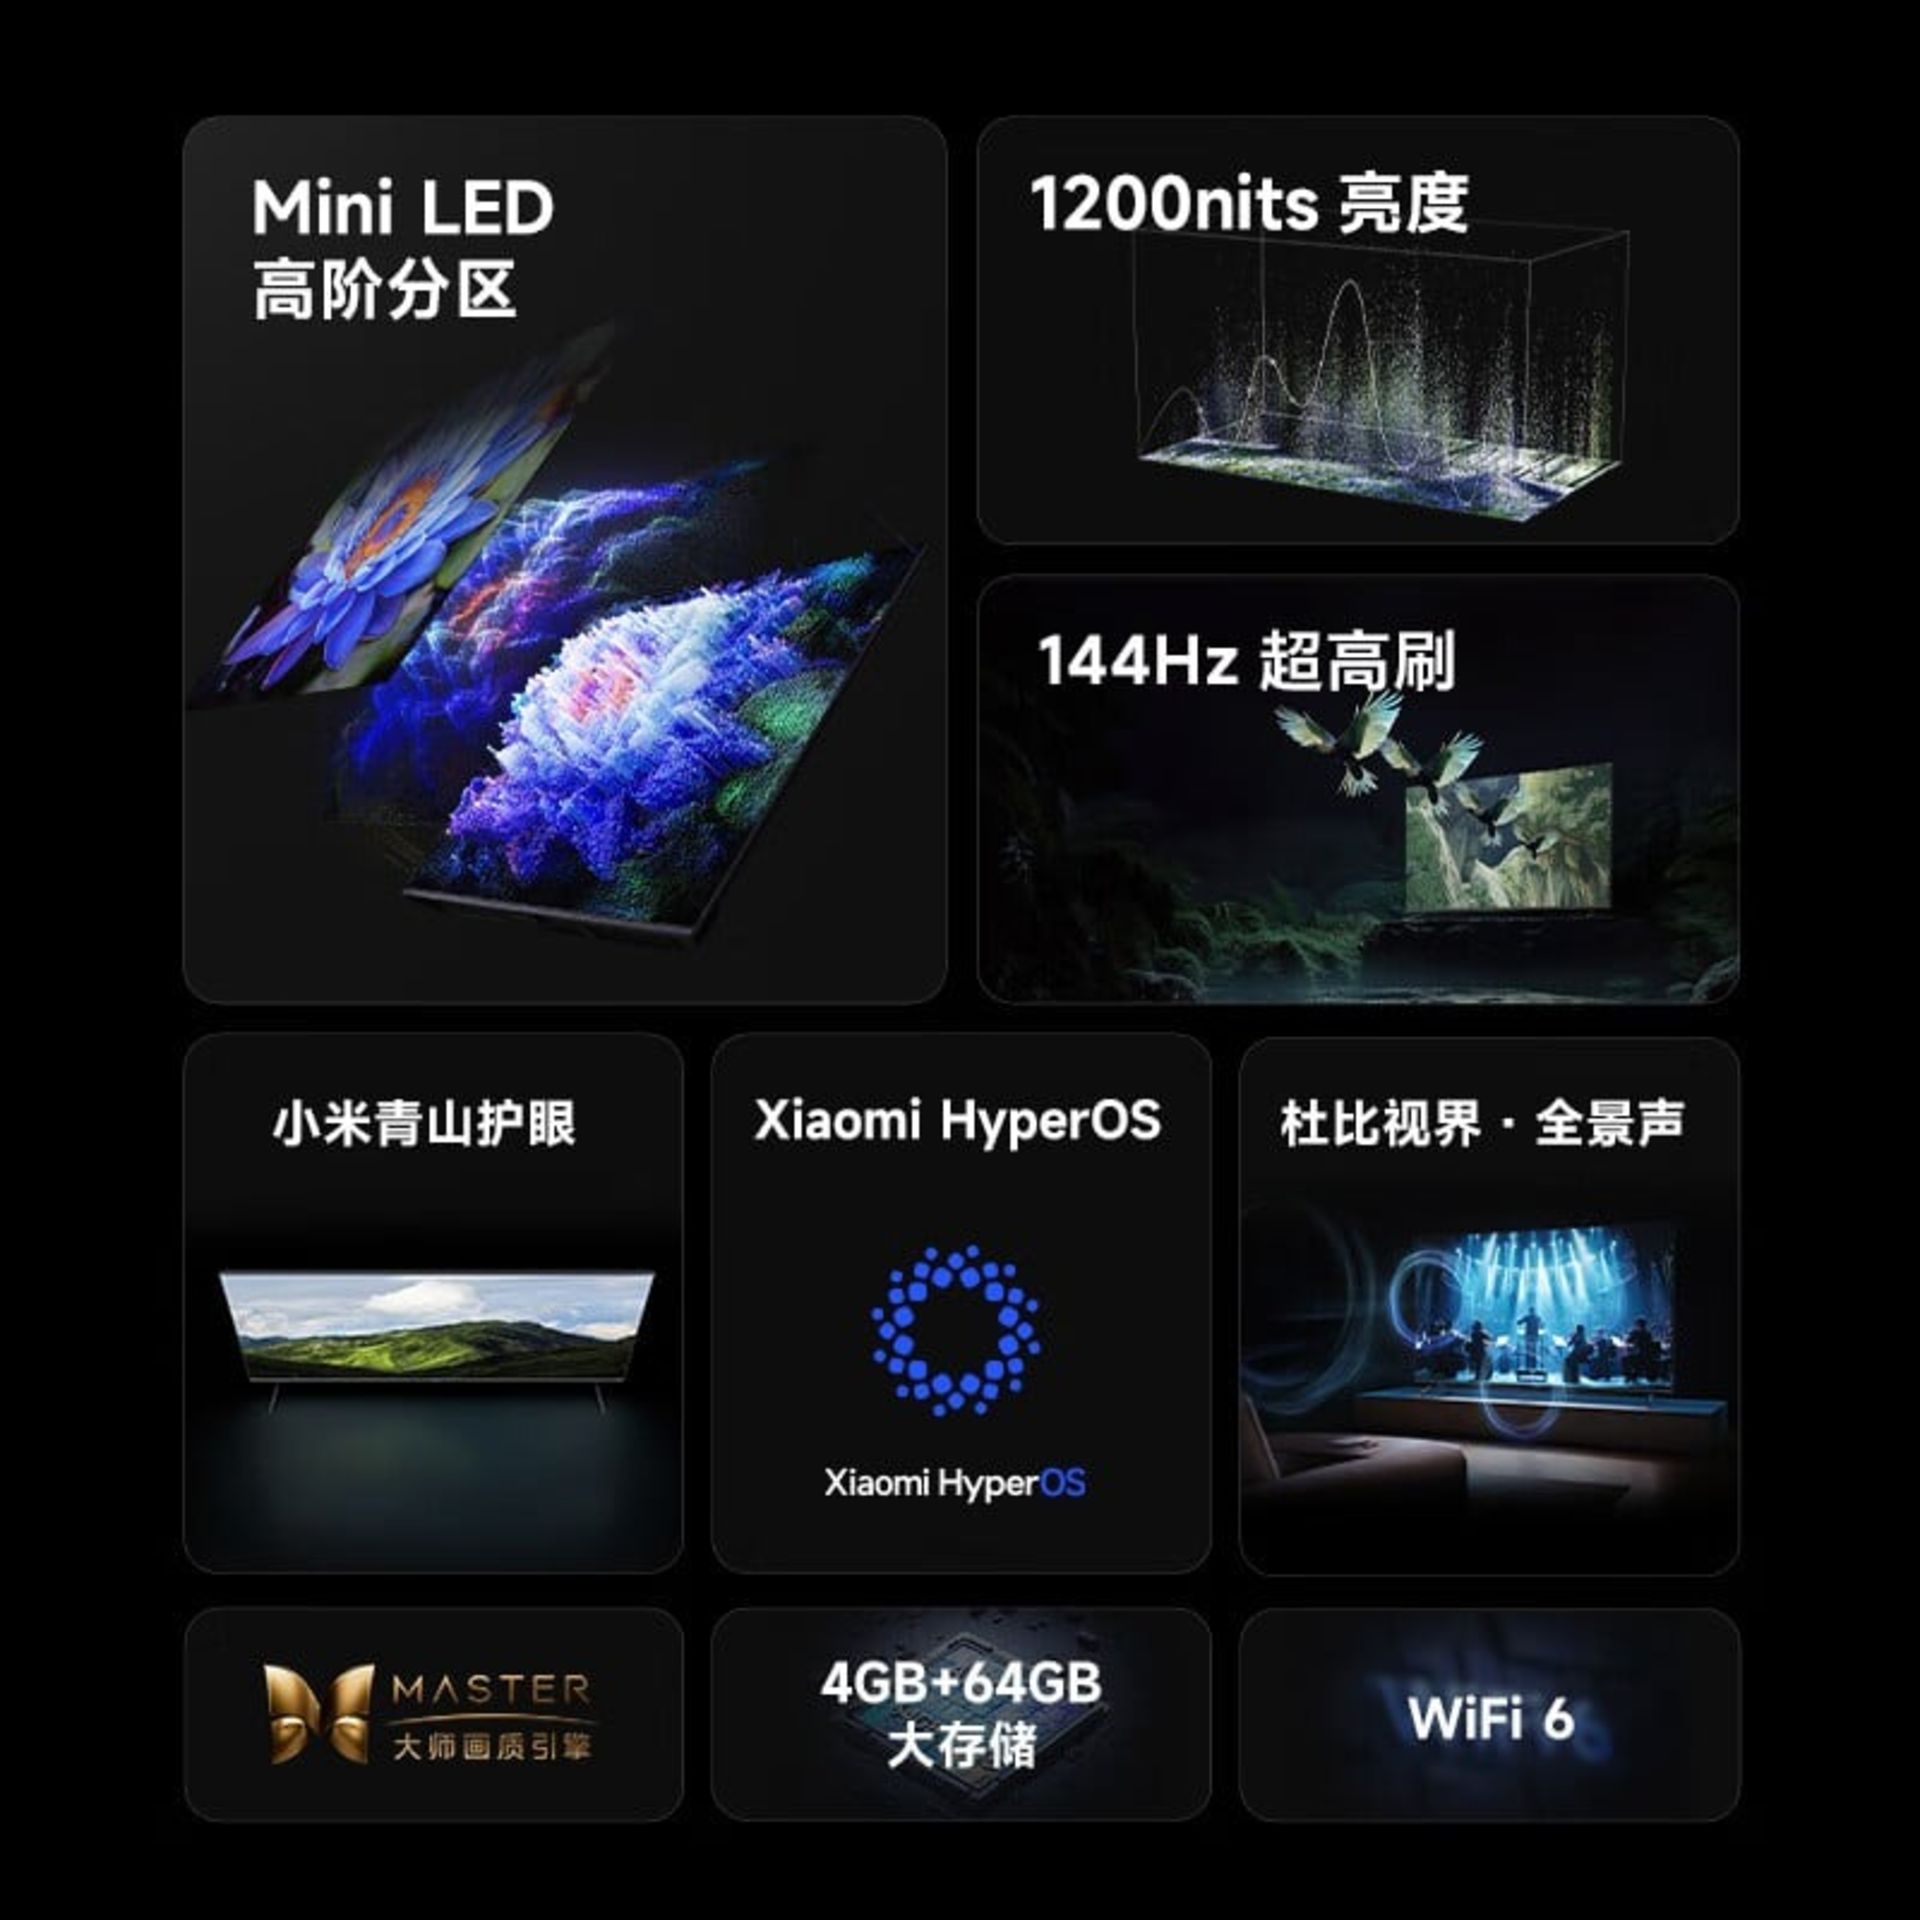 مشخصات تلویزیون شیائومی مدل S75 Mini LED